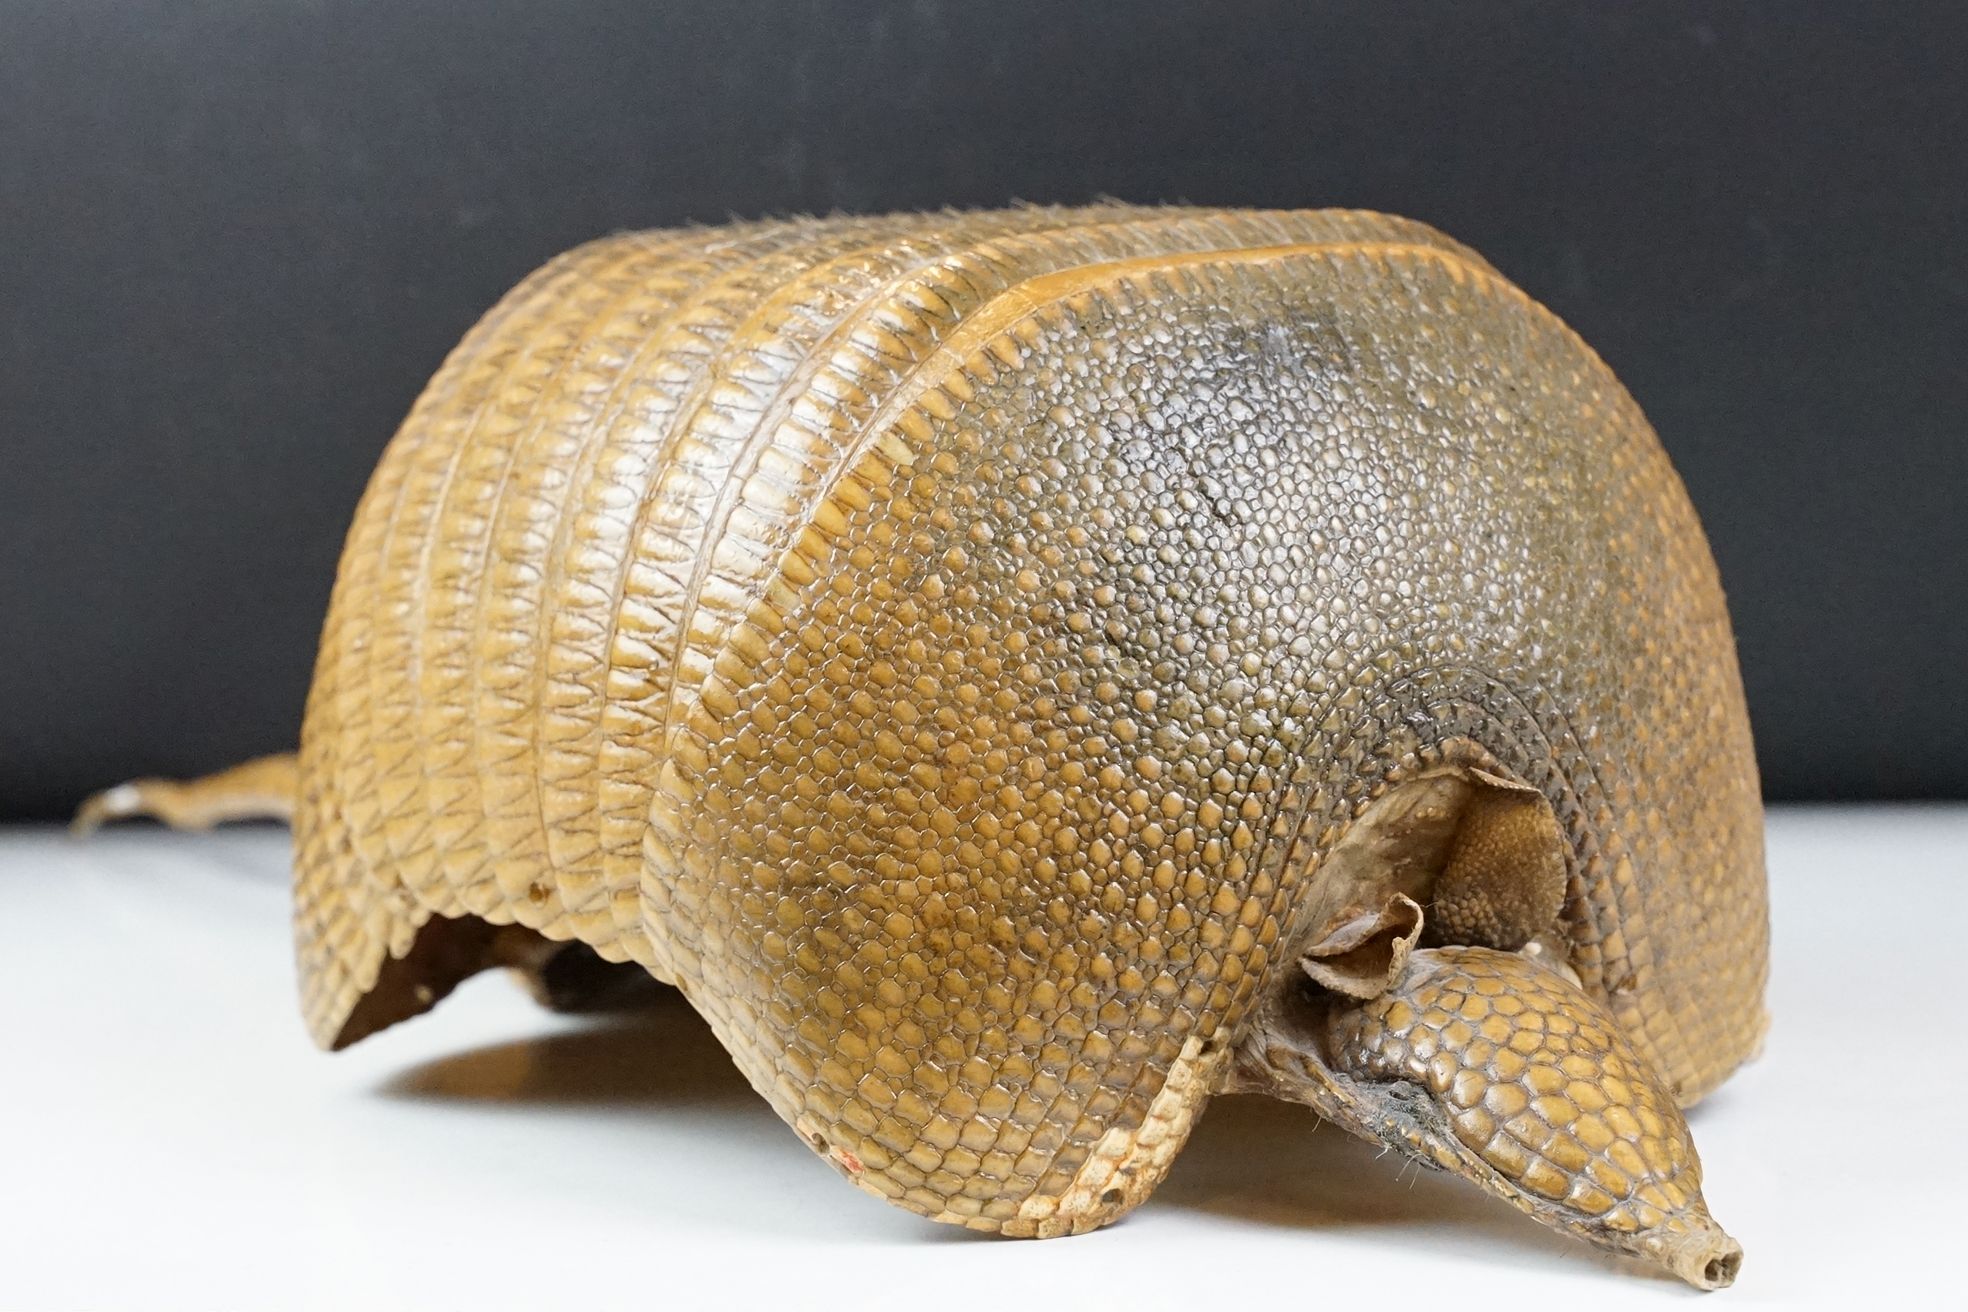 Taxidermy - A taxidermy armadillo shell, approx 68cm long